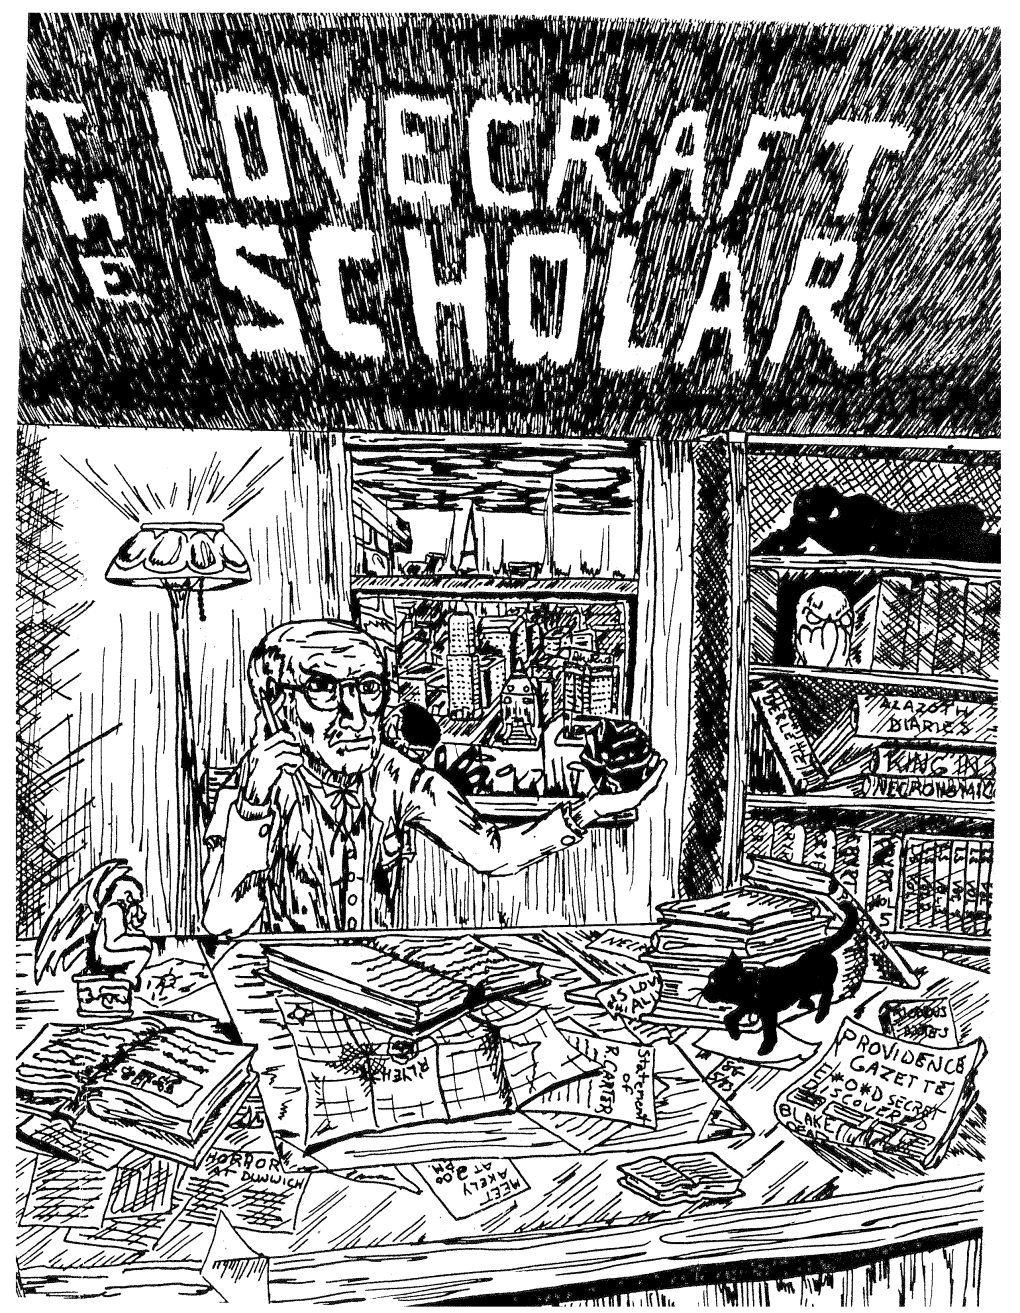 The Lovecraft Scholar